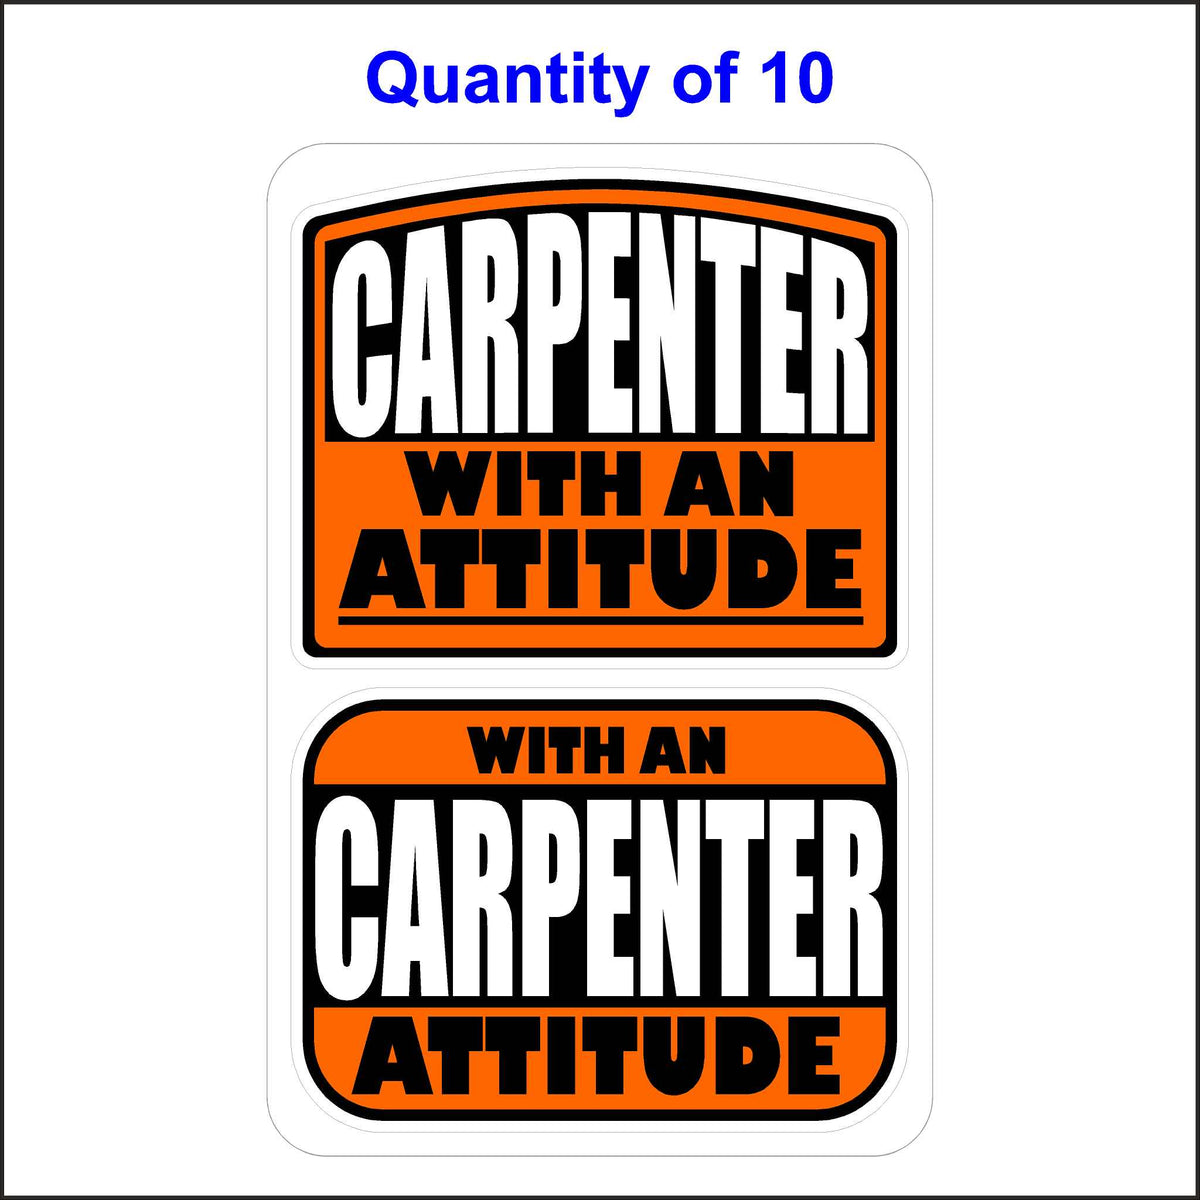 Carpenter With an Attitude Stickers 10 Quantity.